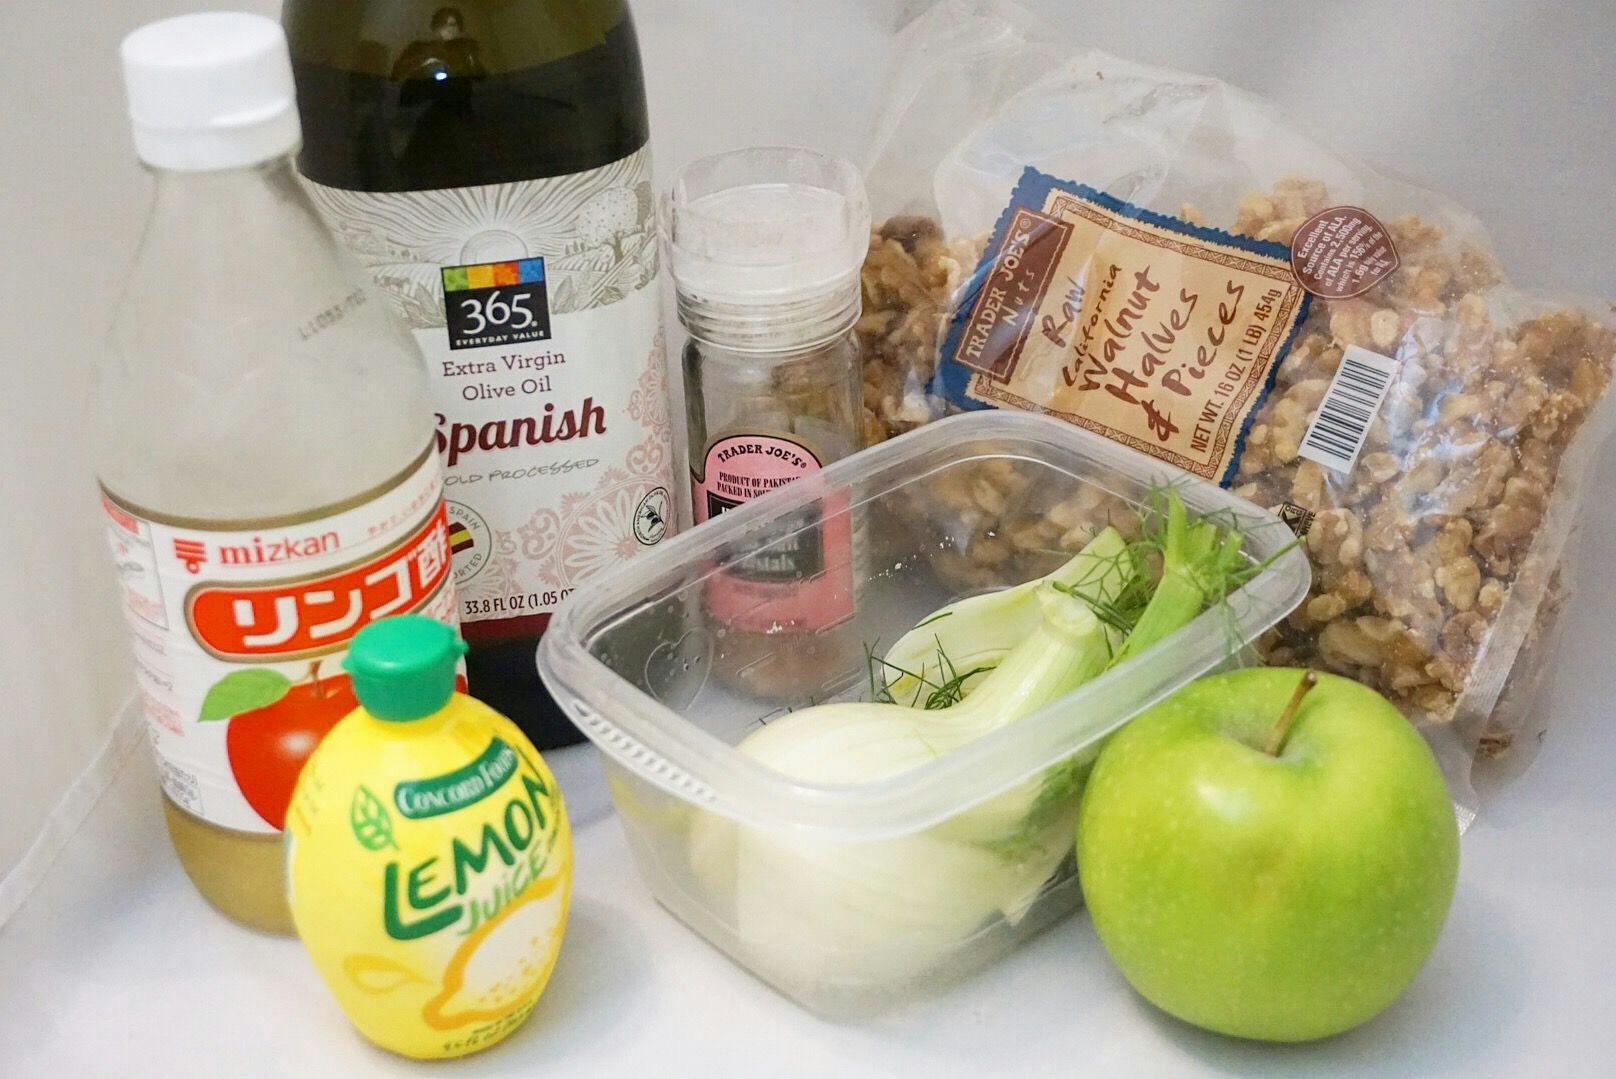 Ingredients to prepare an apple fennel salad 